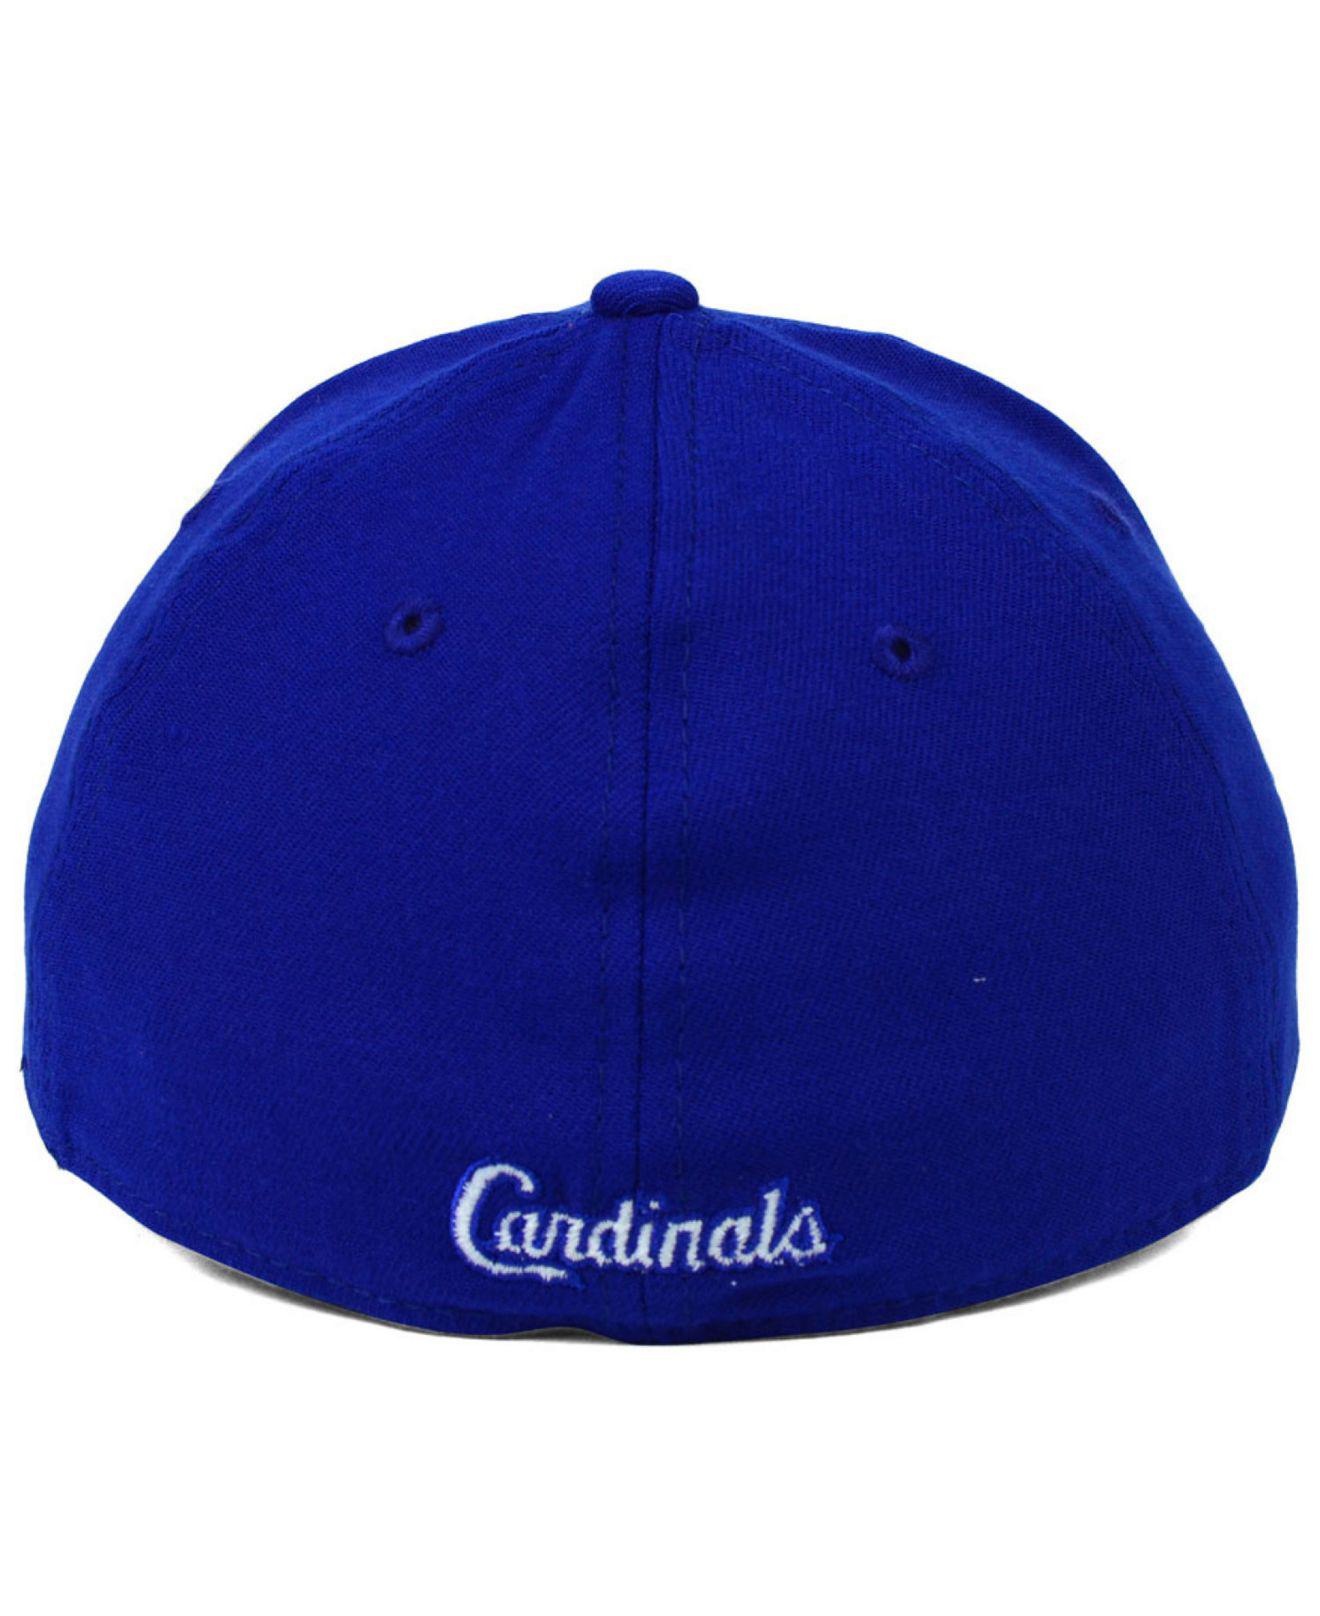 KTZ St. Louis Cardinals Cooperstown 2-Tone 59Fifty Cap in Blue for Men